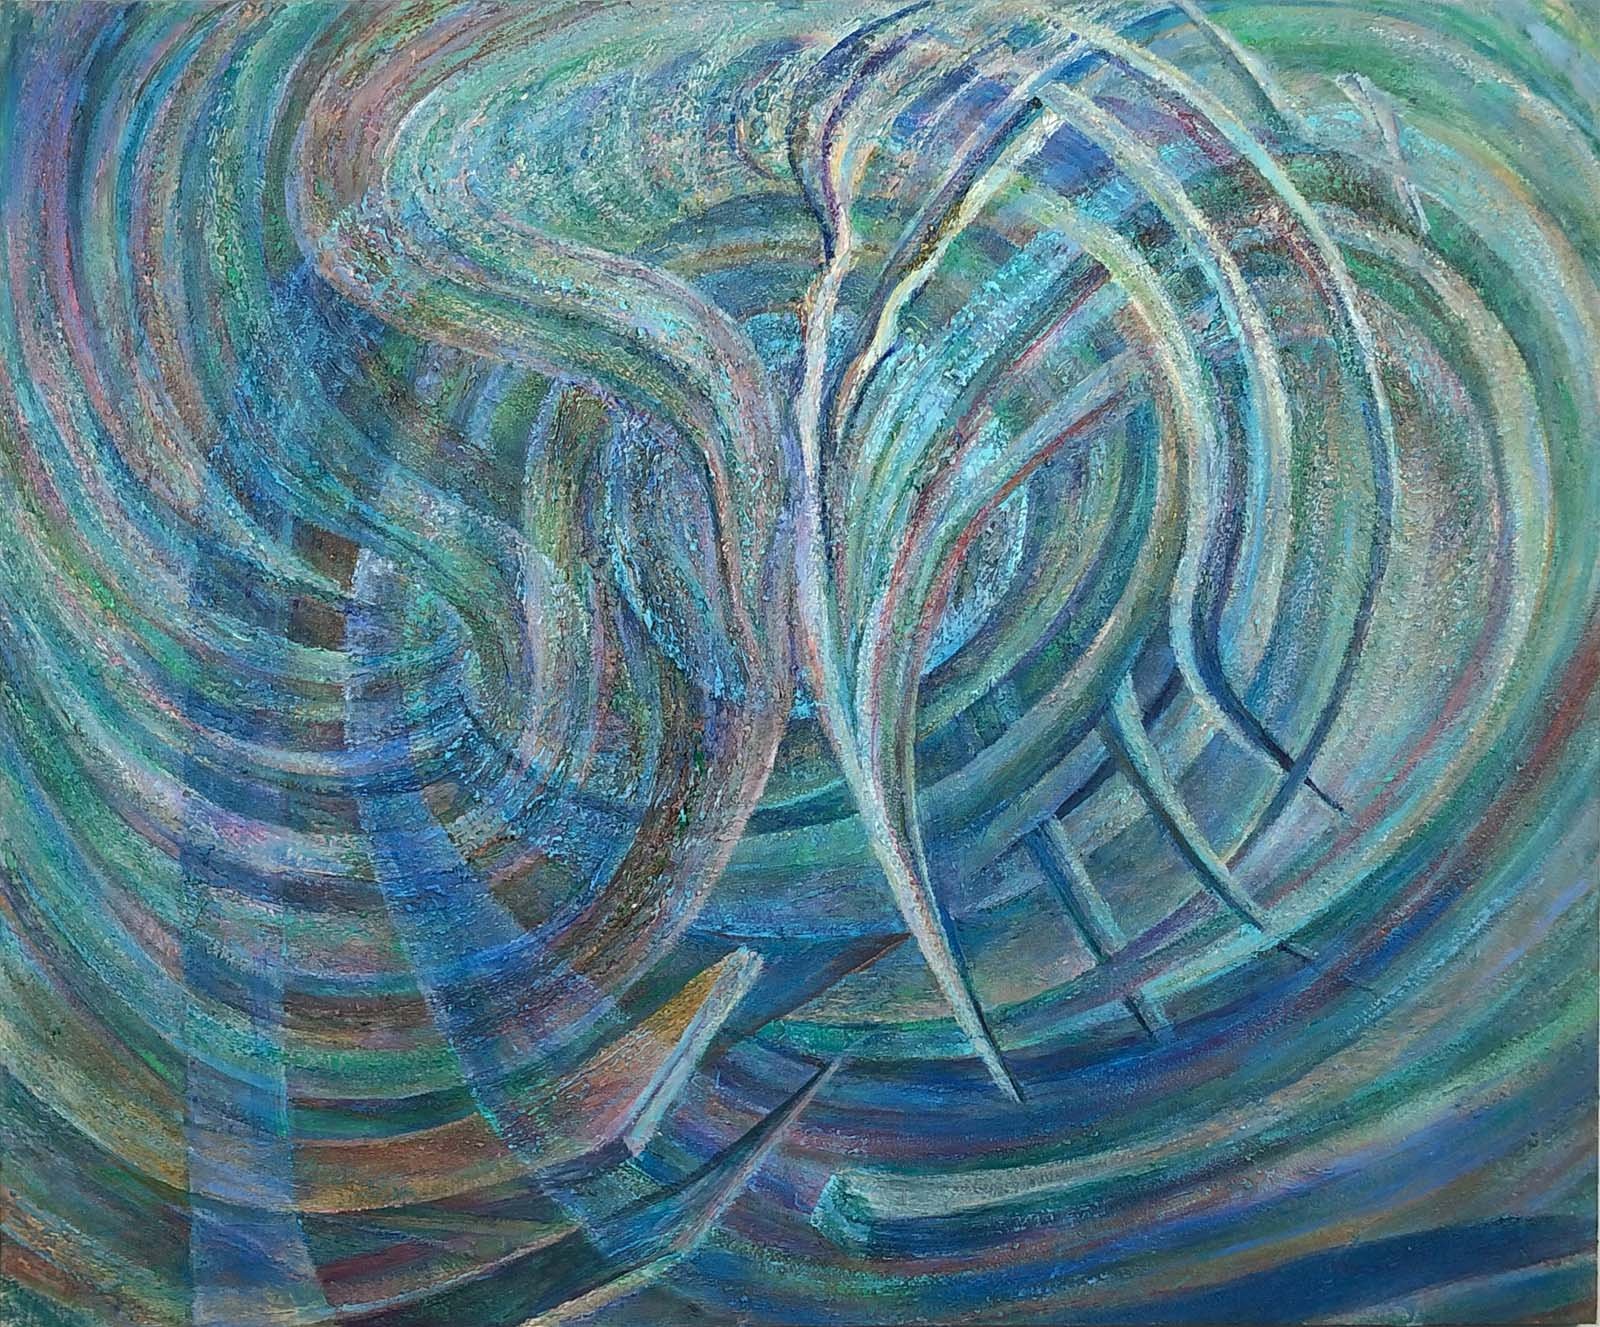   Emerald Window  oil on canvas 48” x 60” 